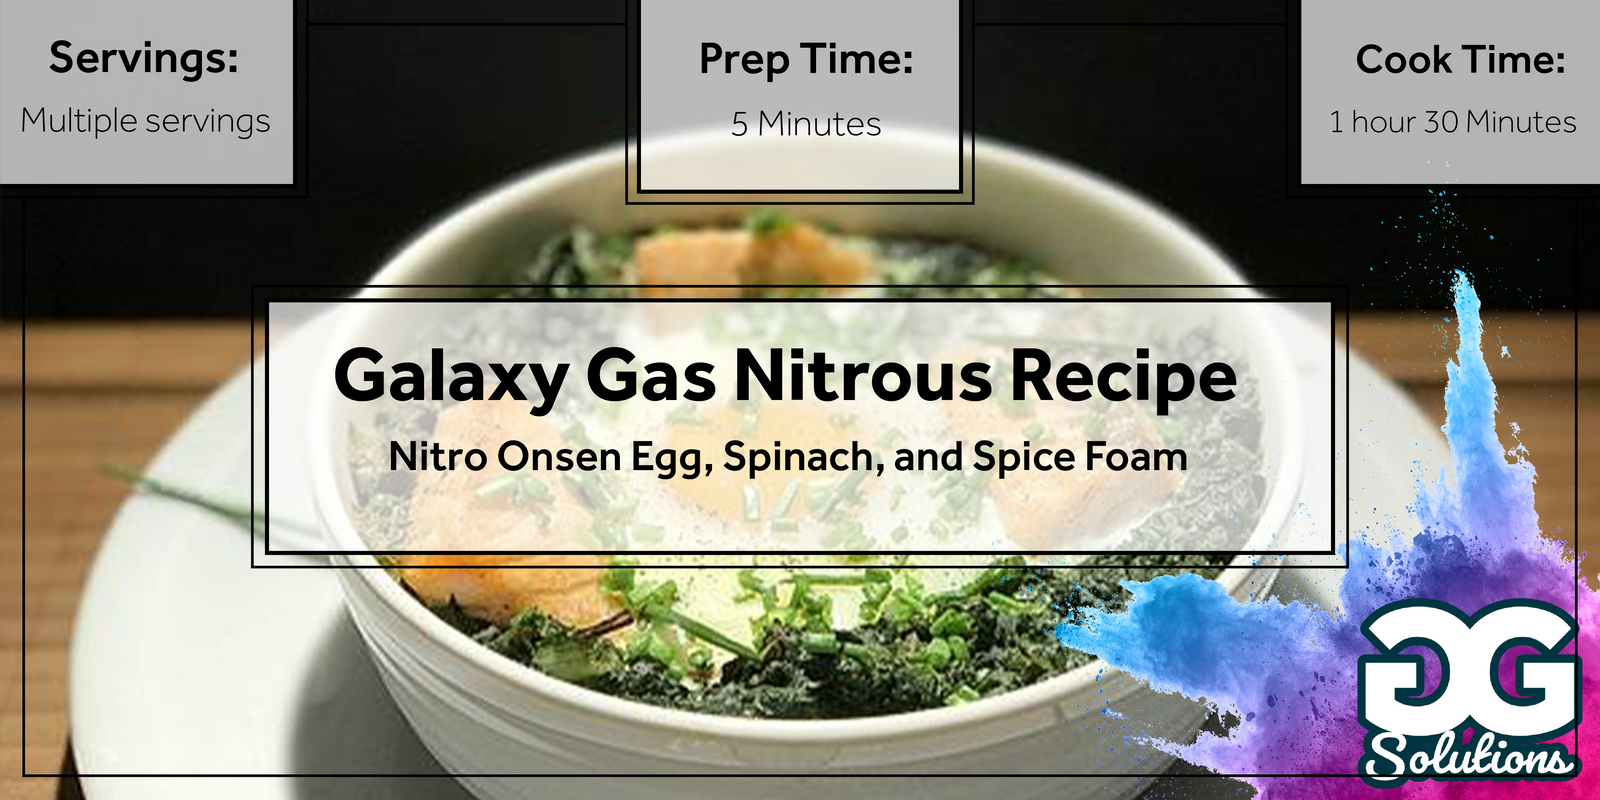 Galaxy Gas Nitrous Recipe: Nitro Onsen Egg, Spinach, and Spice Foam